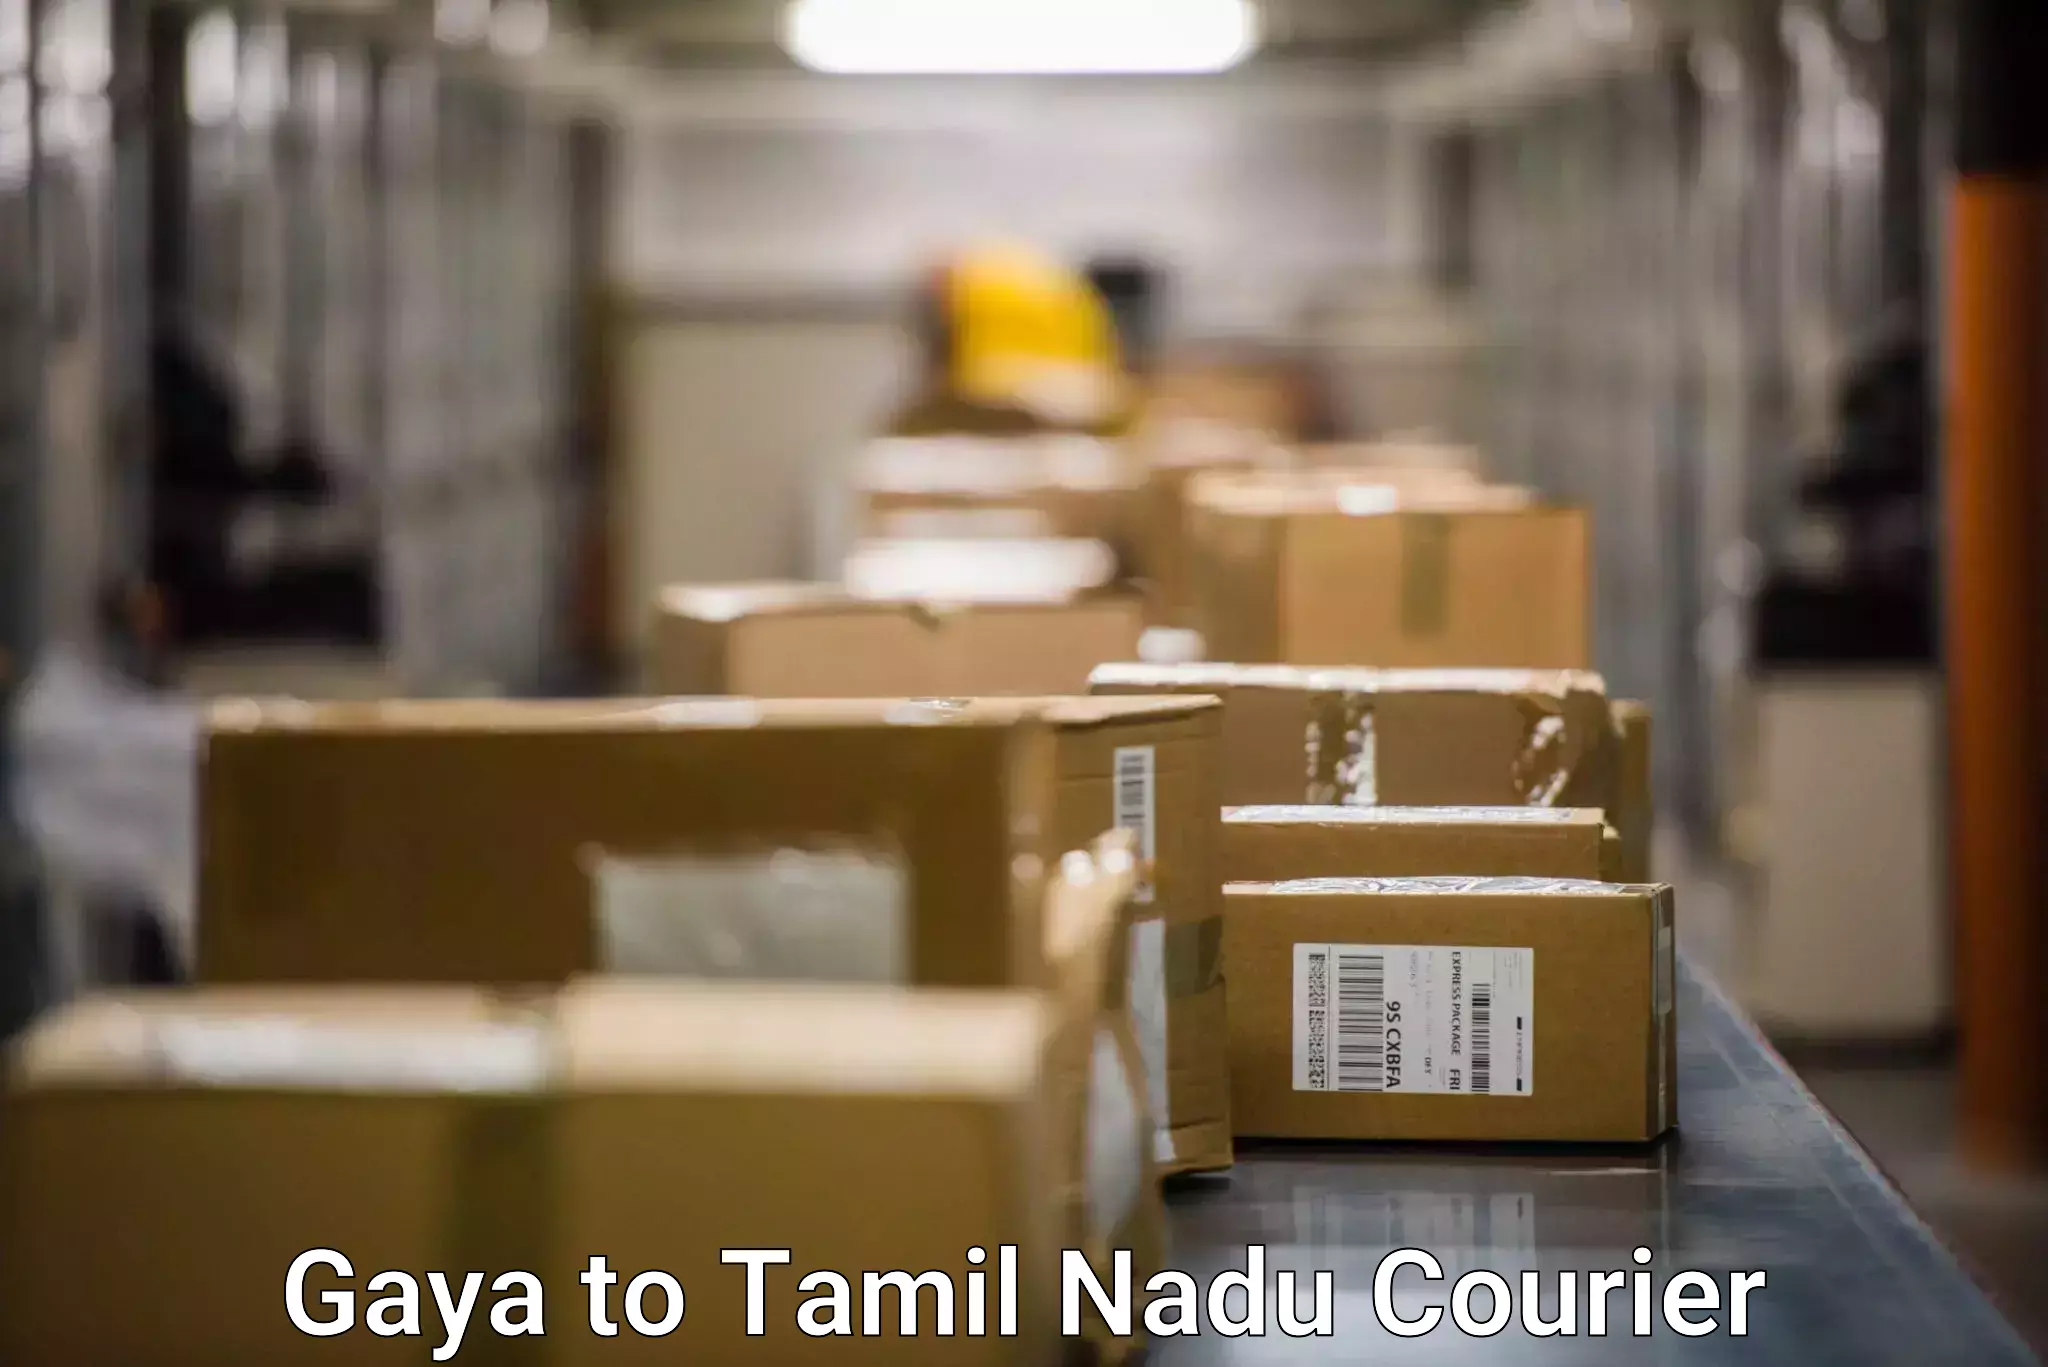 Global logistics network Gaya to Tamil Nadu